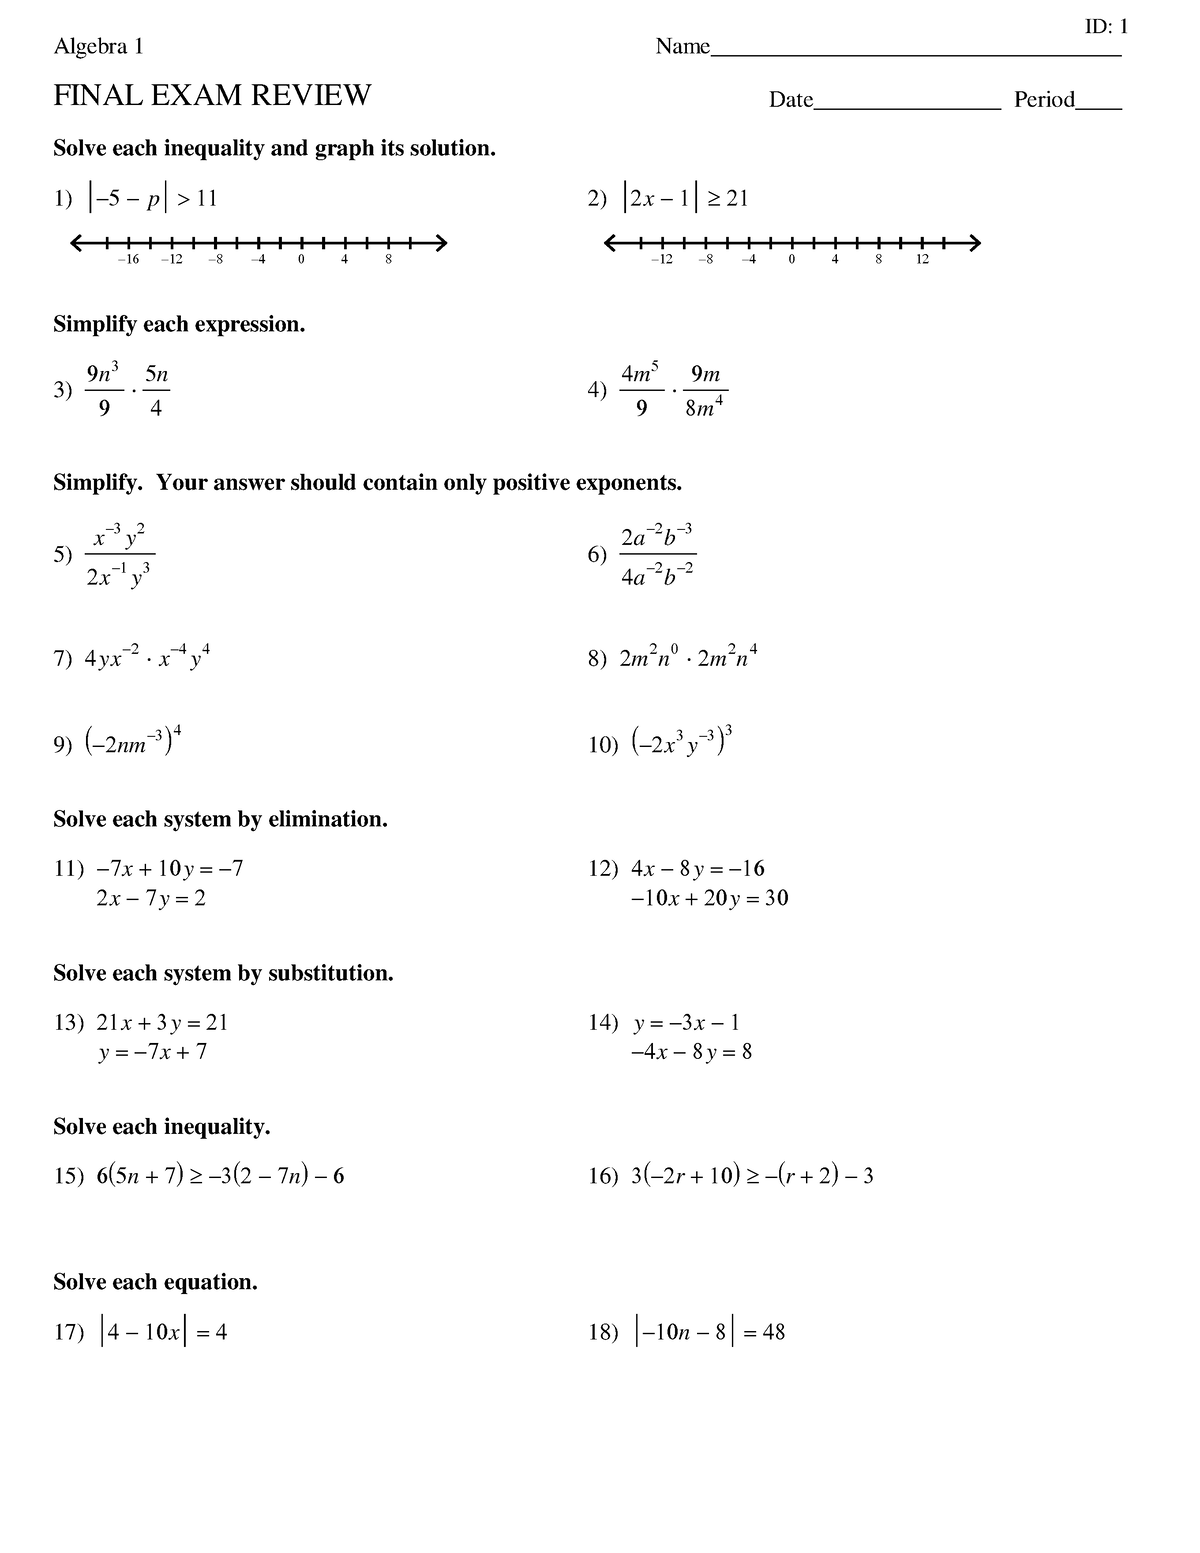 algebra 1 assignment worksheet answers